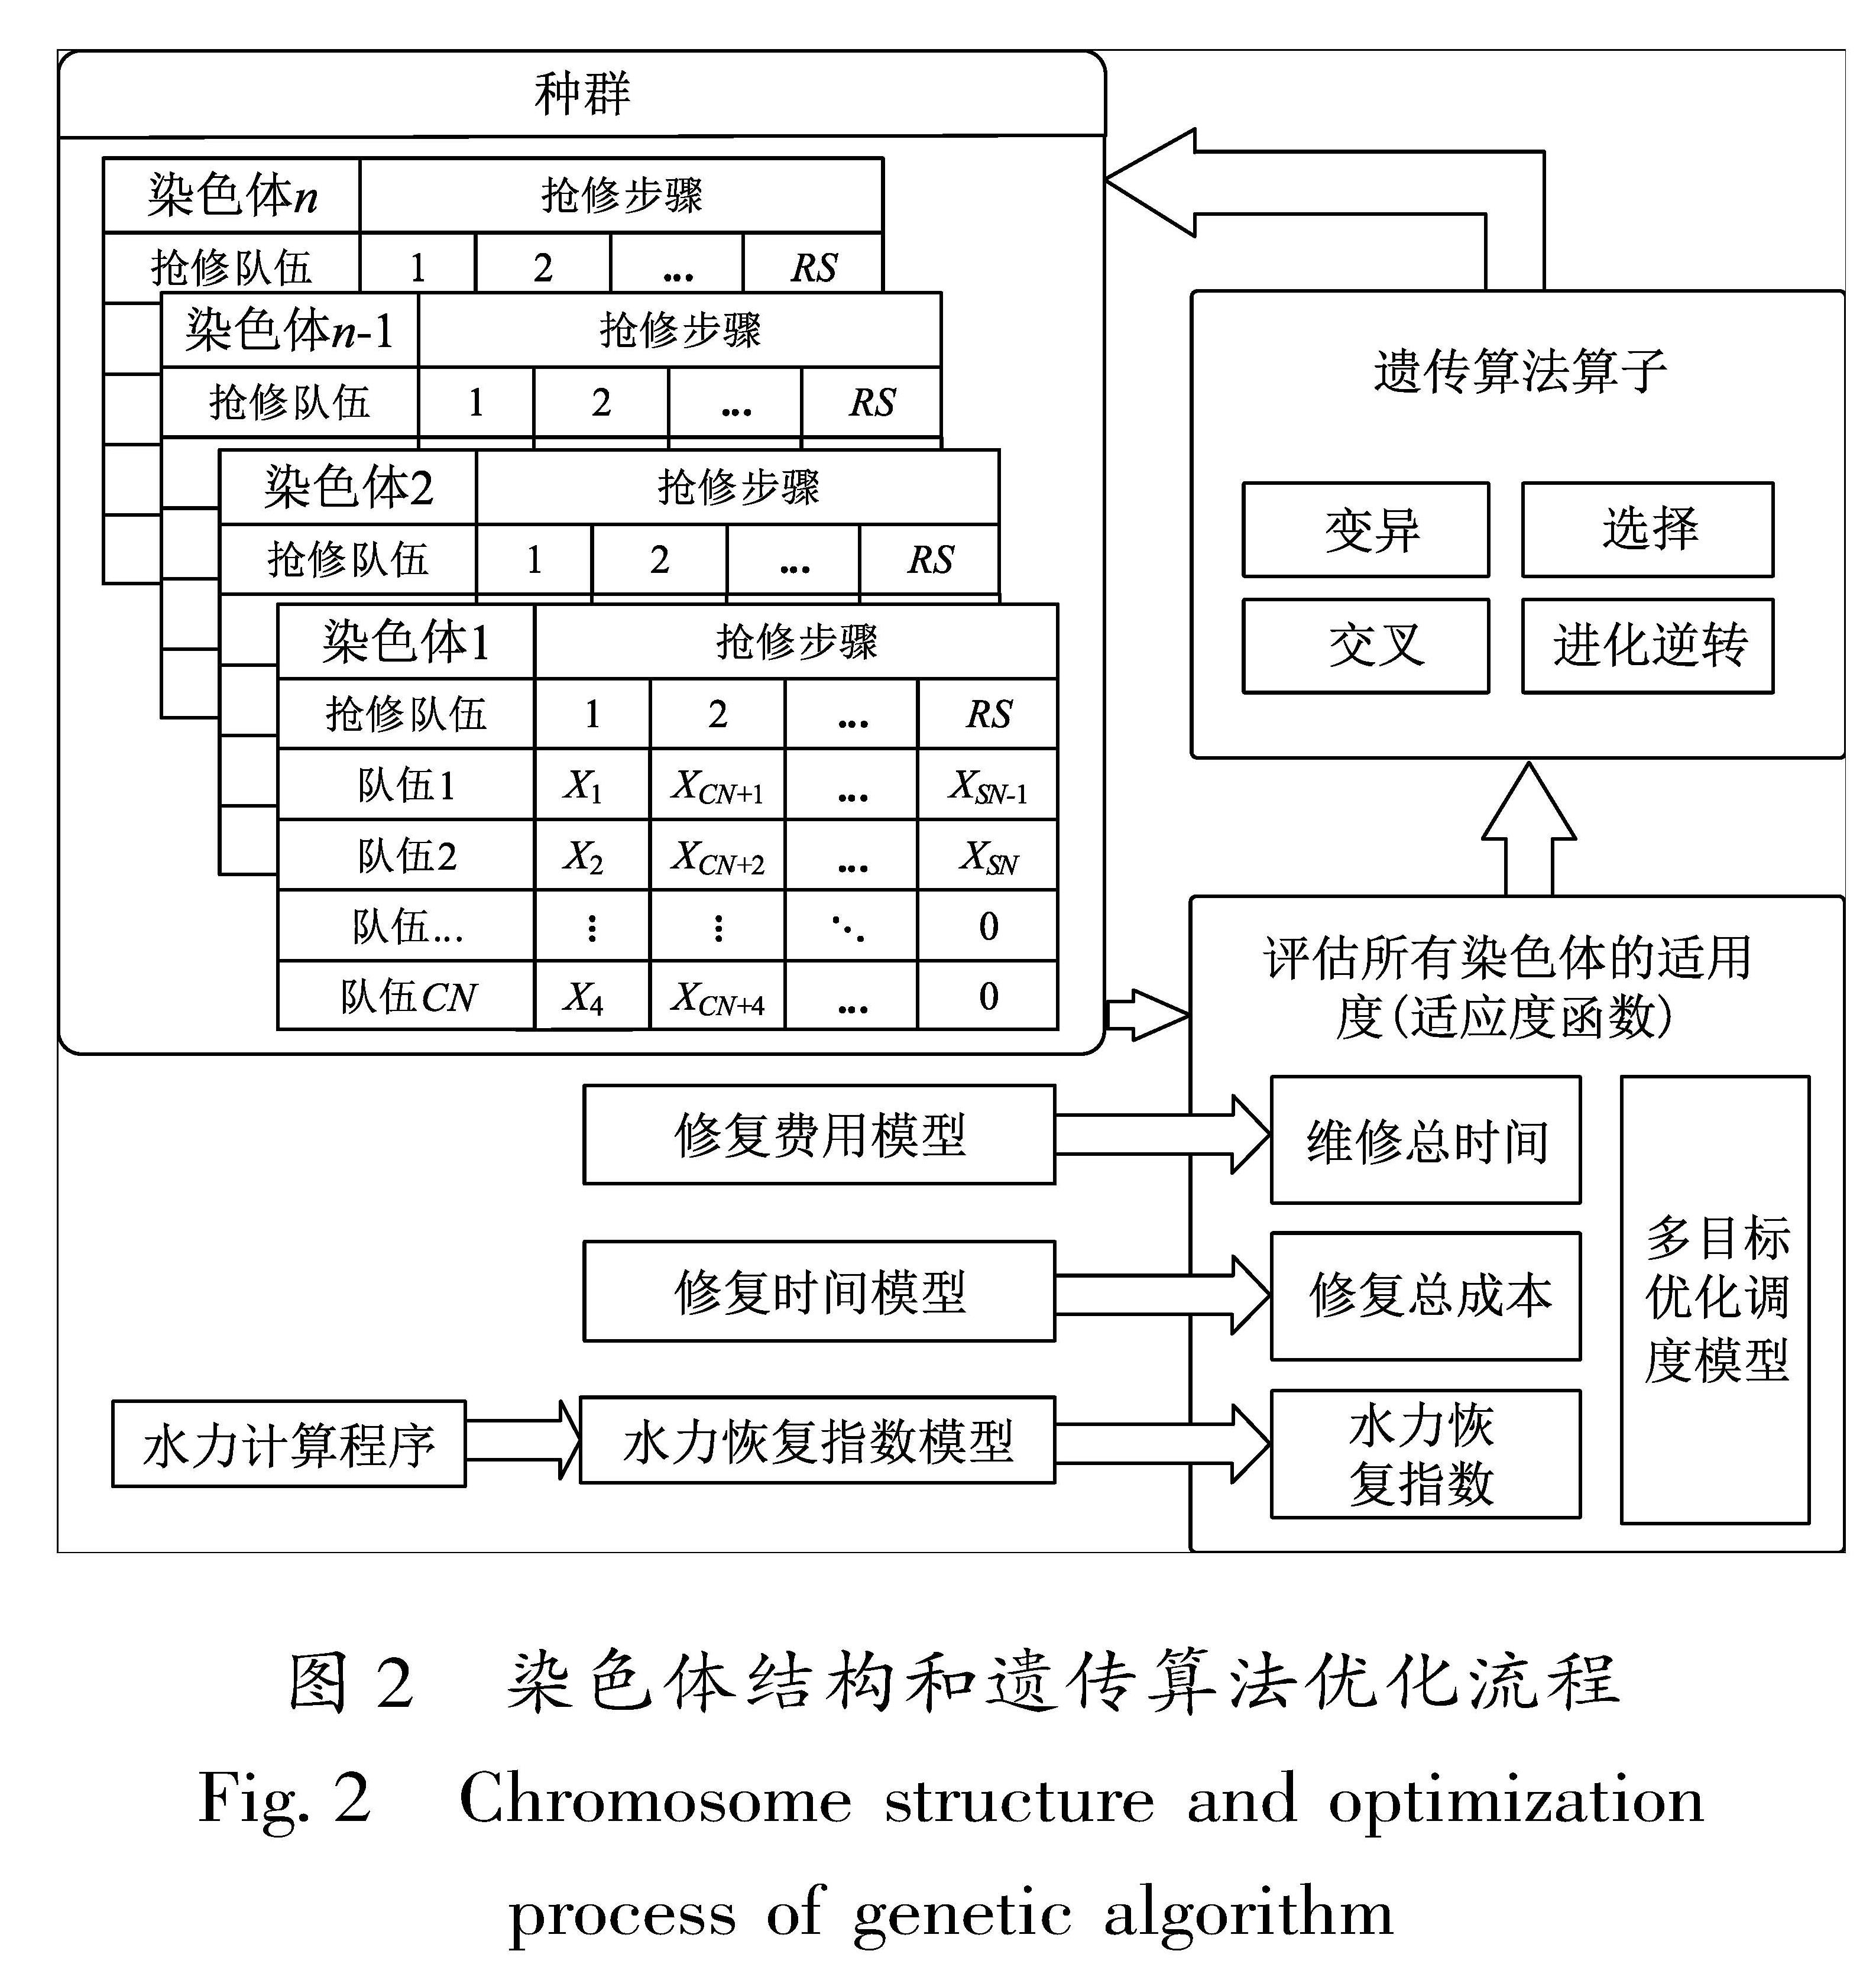 图2 染色体结构和遗传算法优化流程<br/>Fig.2 Chromosome structure and optimizationprocess of genetic algorithm